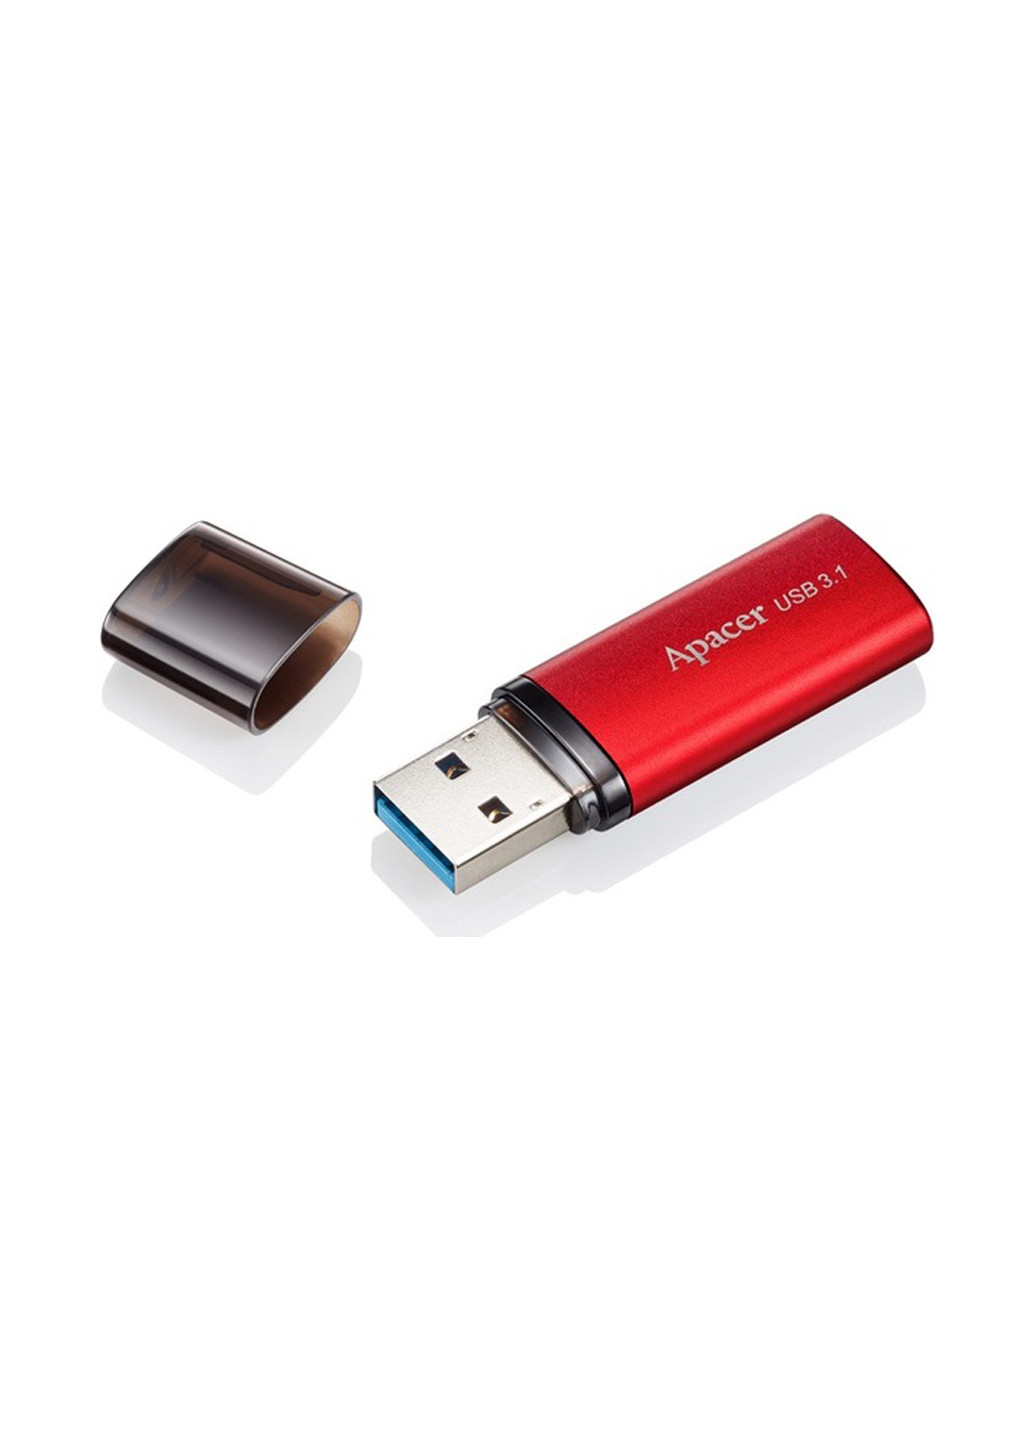 Флеш память USB AH25B 128GB USB 3.1 Red (AP128GAH25BR-1) Apacer флеш память usb apacer ah25b 128gb usb 3.1 red (ap128gah25br-1) (135165428)